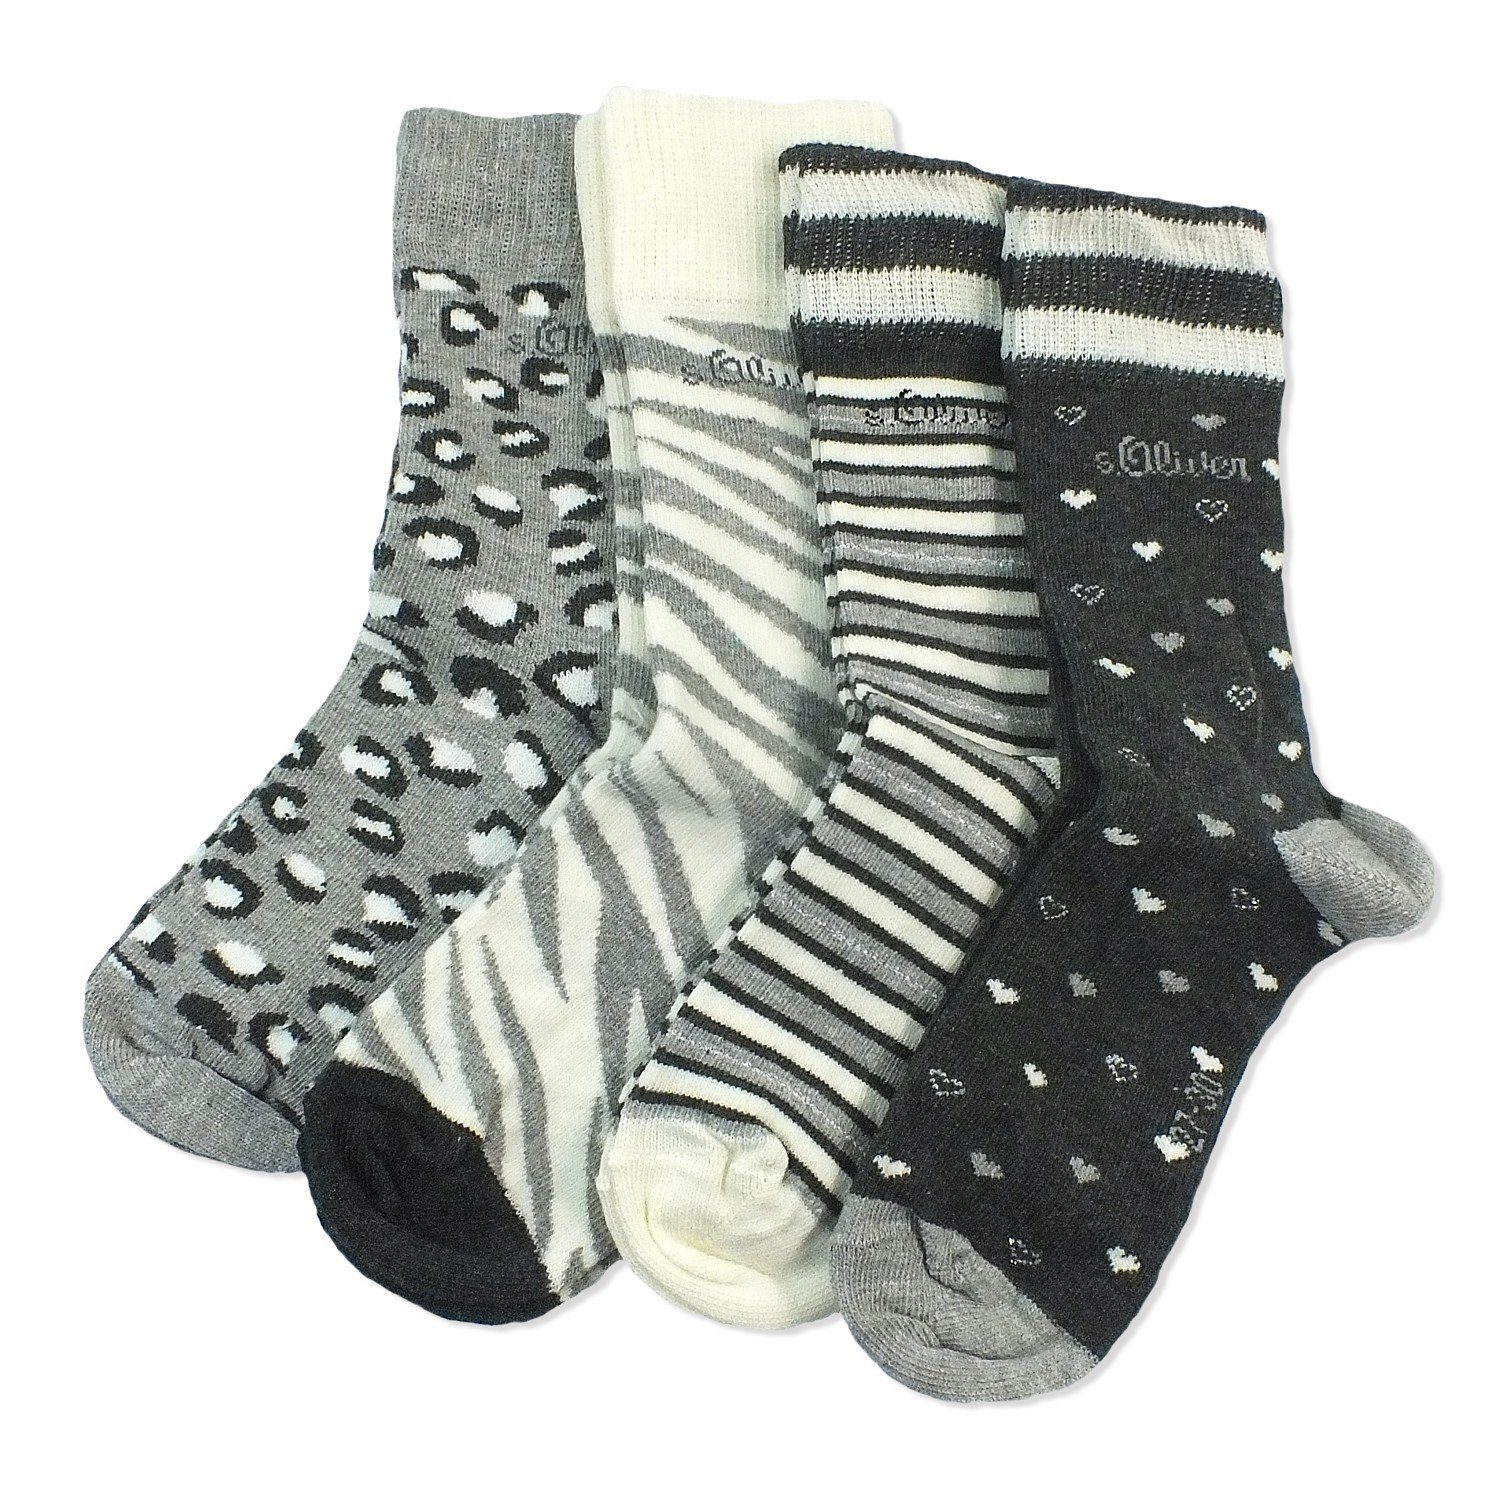 s.Oliver Langsocken S20308 (Set, 4-Paar, 4 Paar) Kinder Socken, Jungen & Mädchen mit Baumwolle, Kindersocken